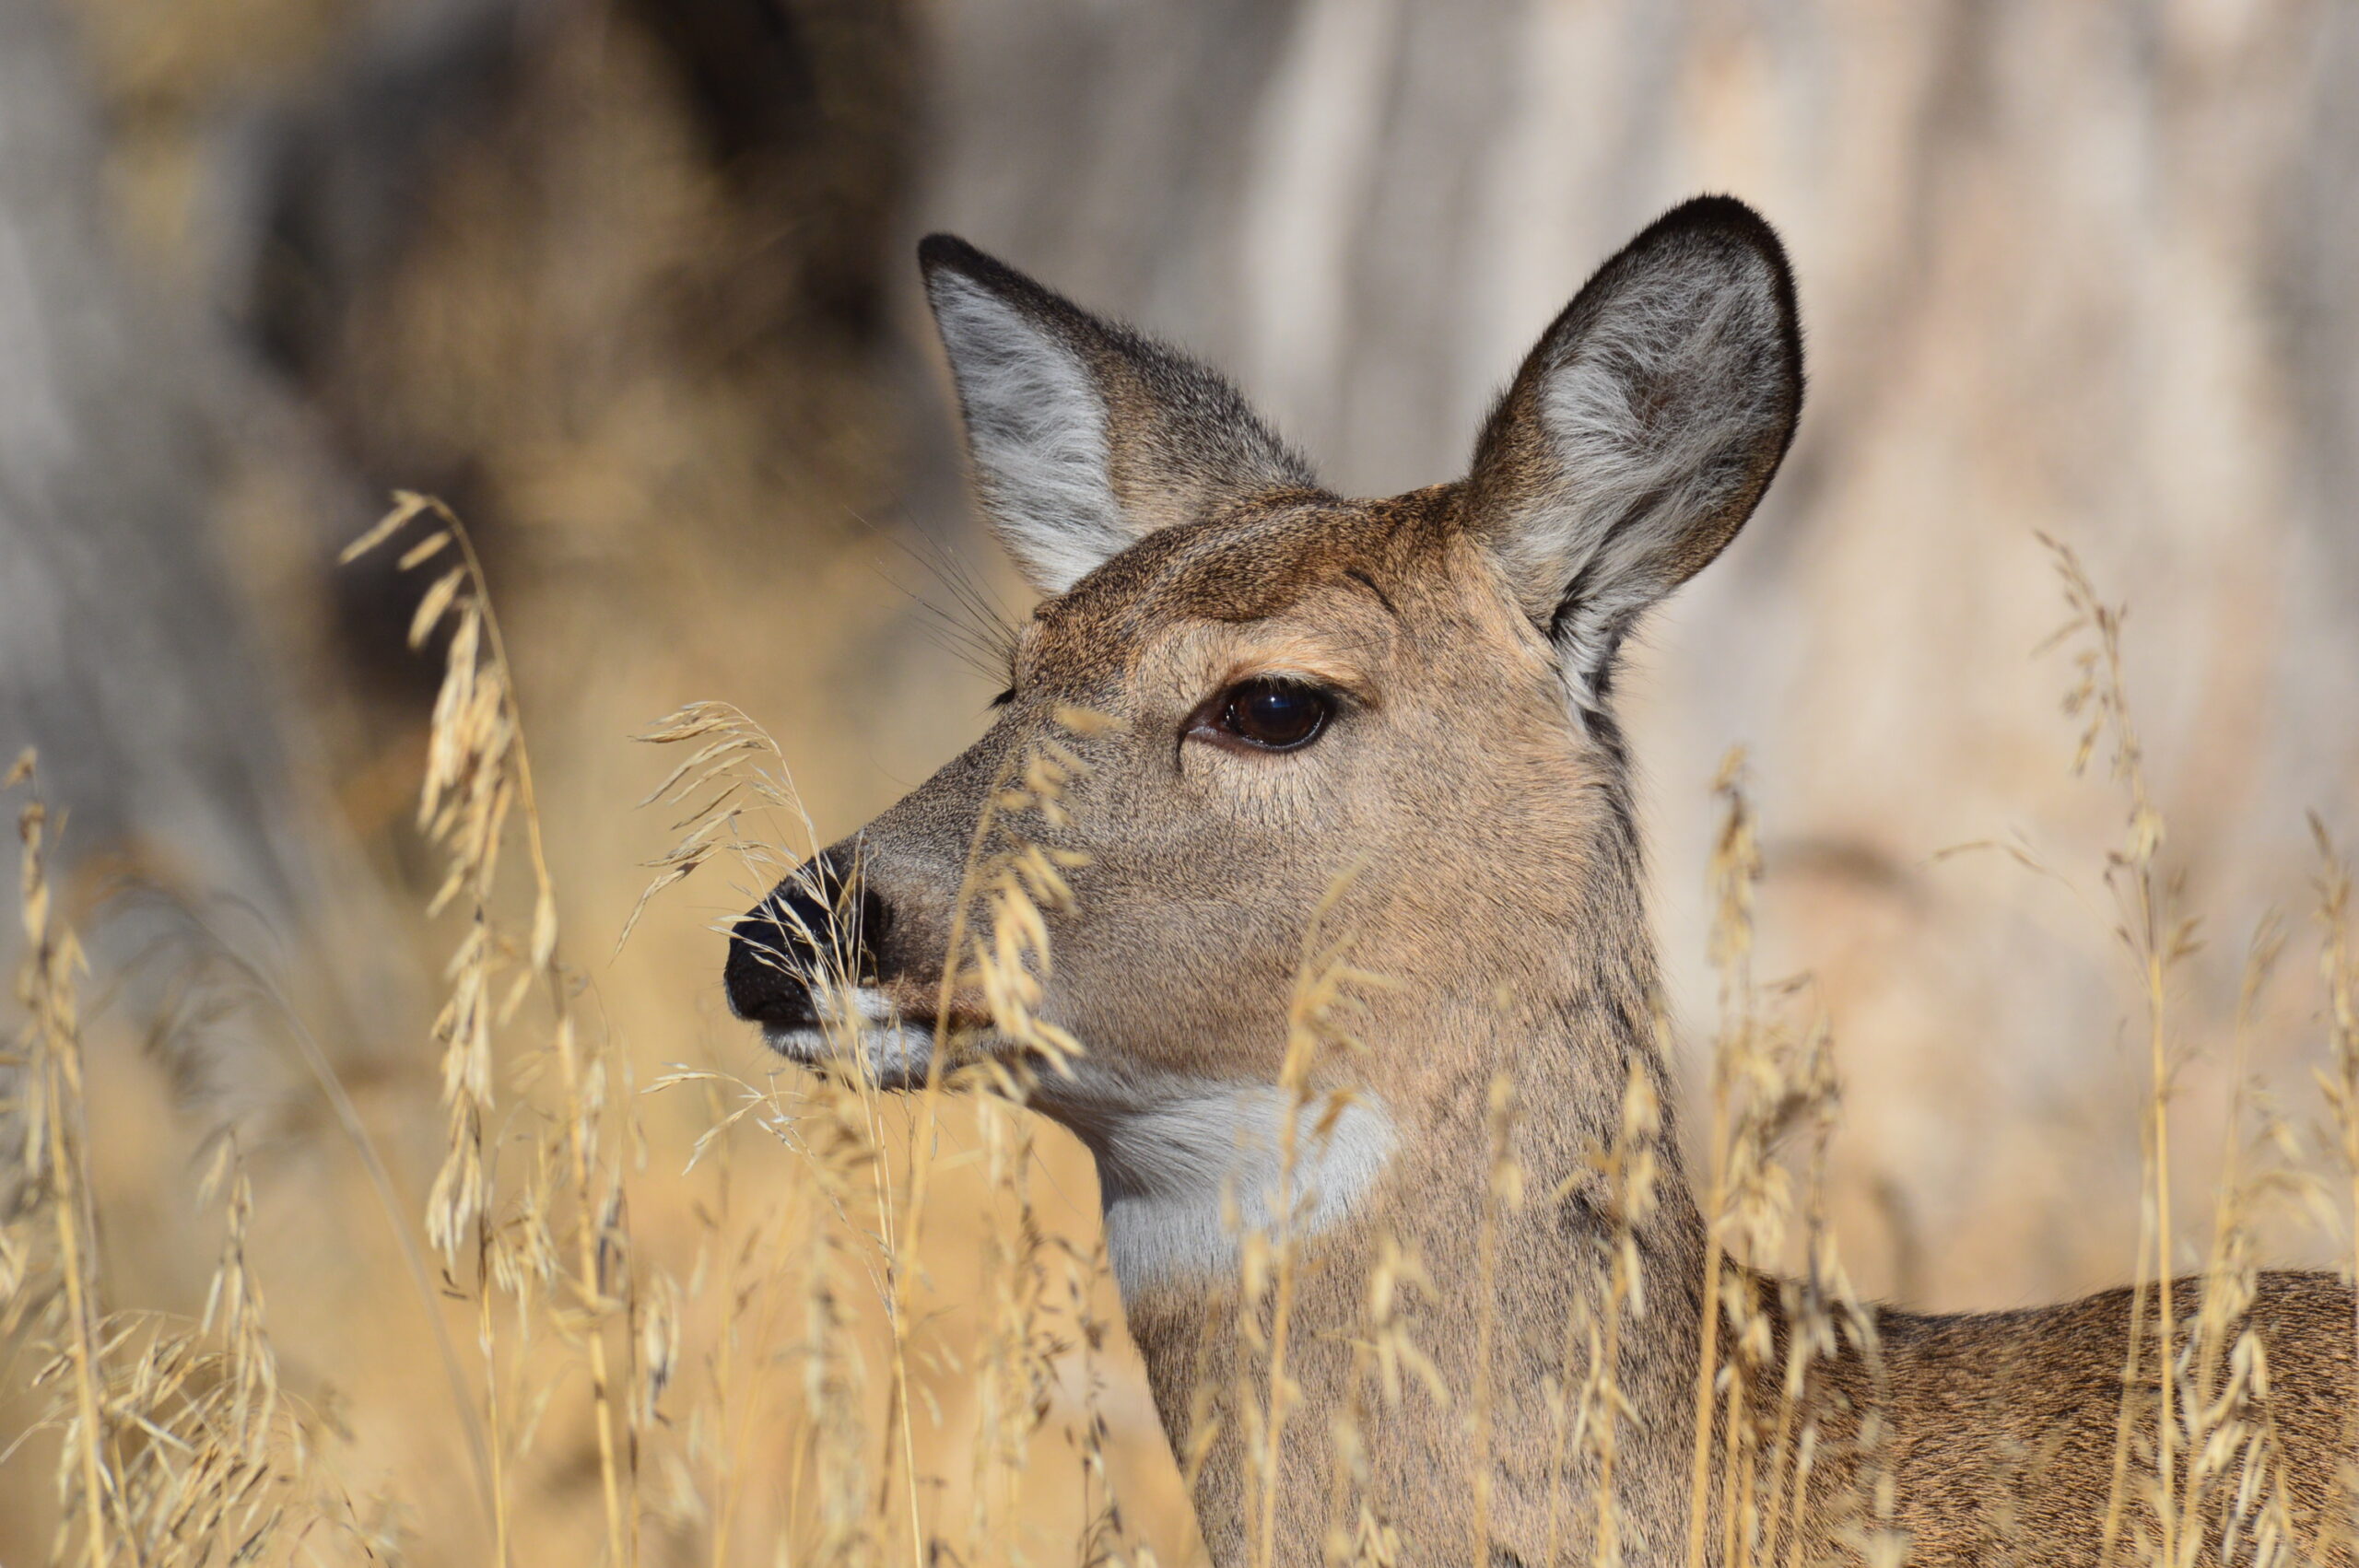 North Dakota to cut 8,000 deer tags this coming season